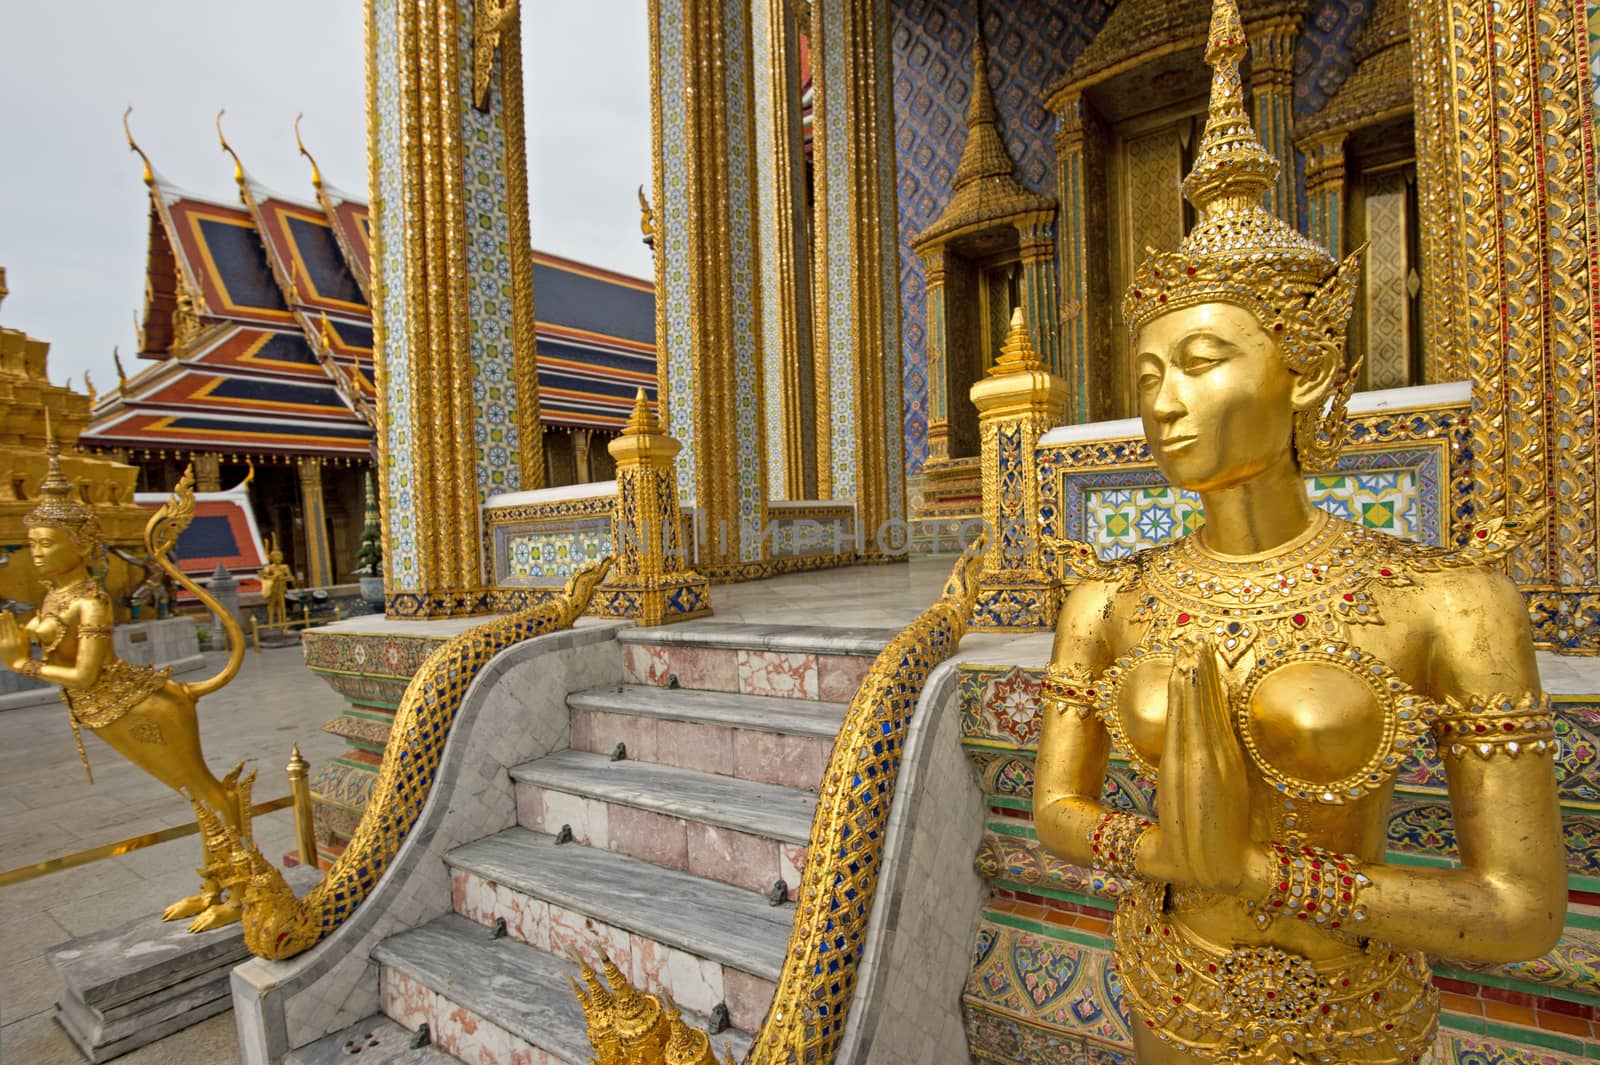 A Golden Kinnari statue in Wat Phra Kaew, Bangkok, Thailand by think4photop